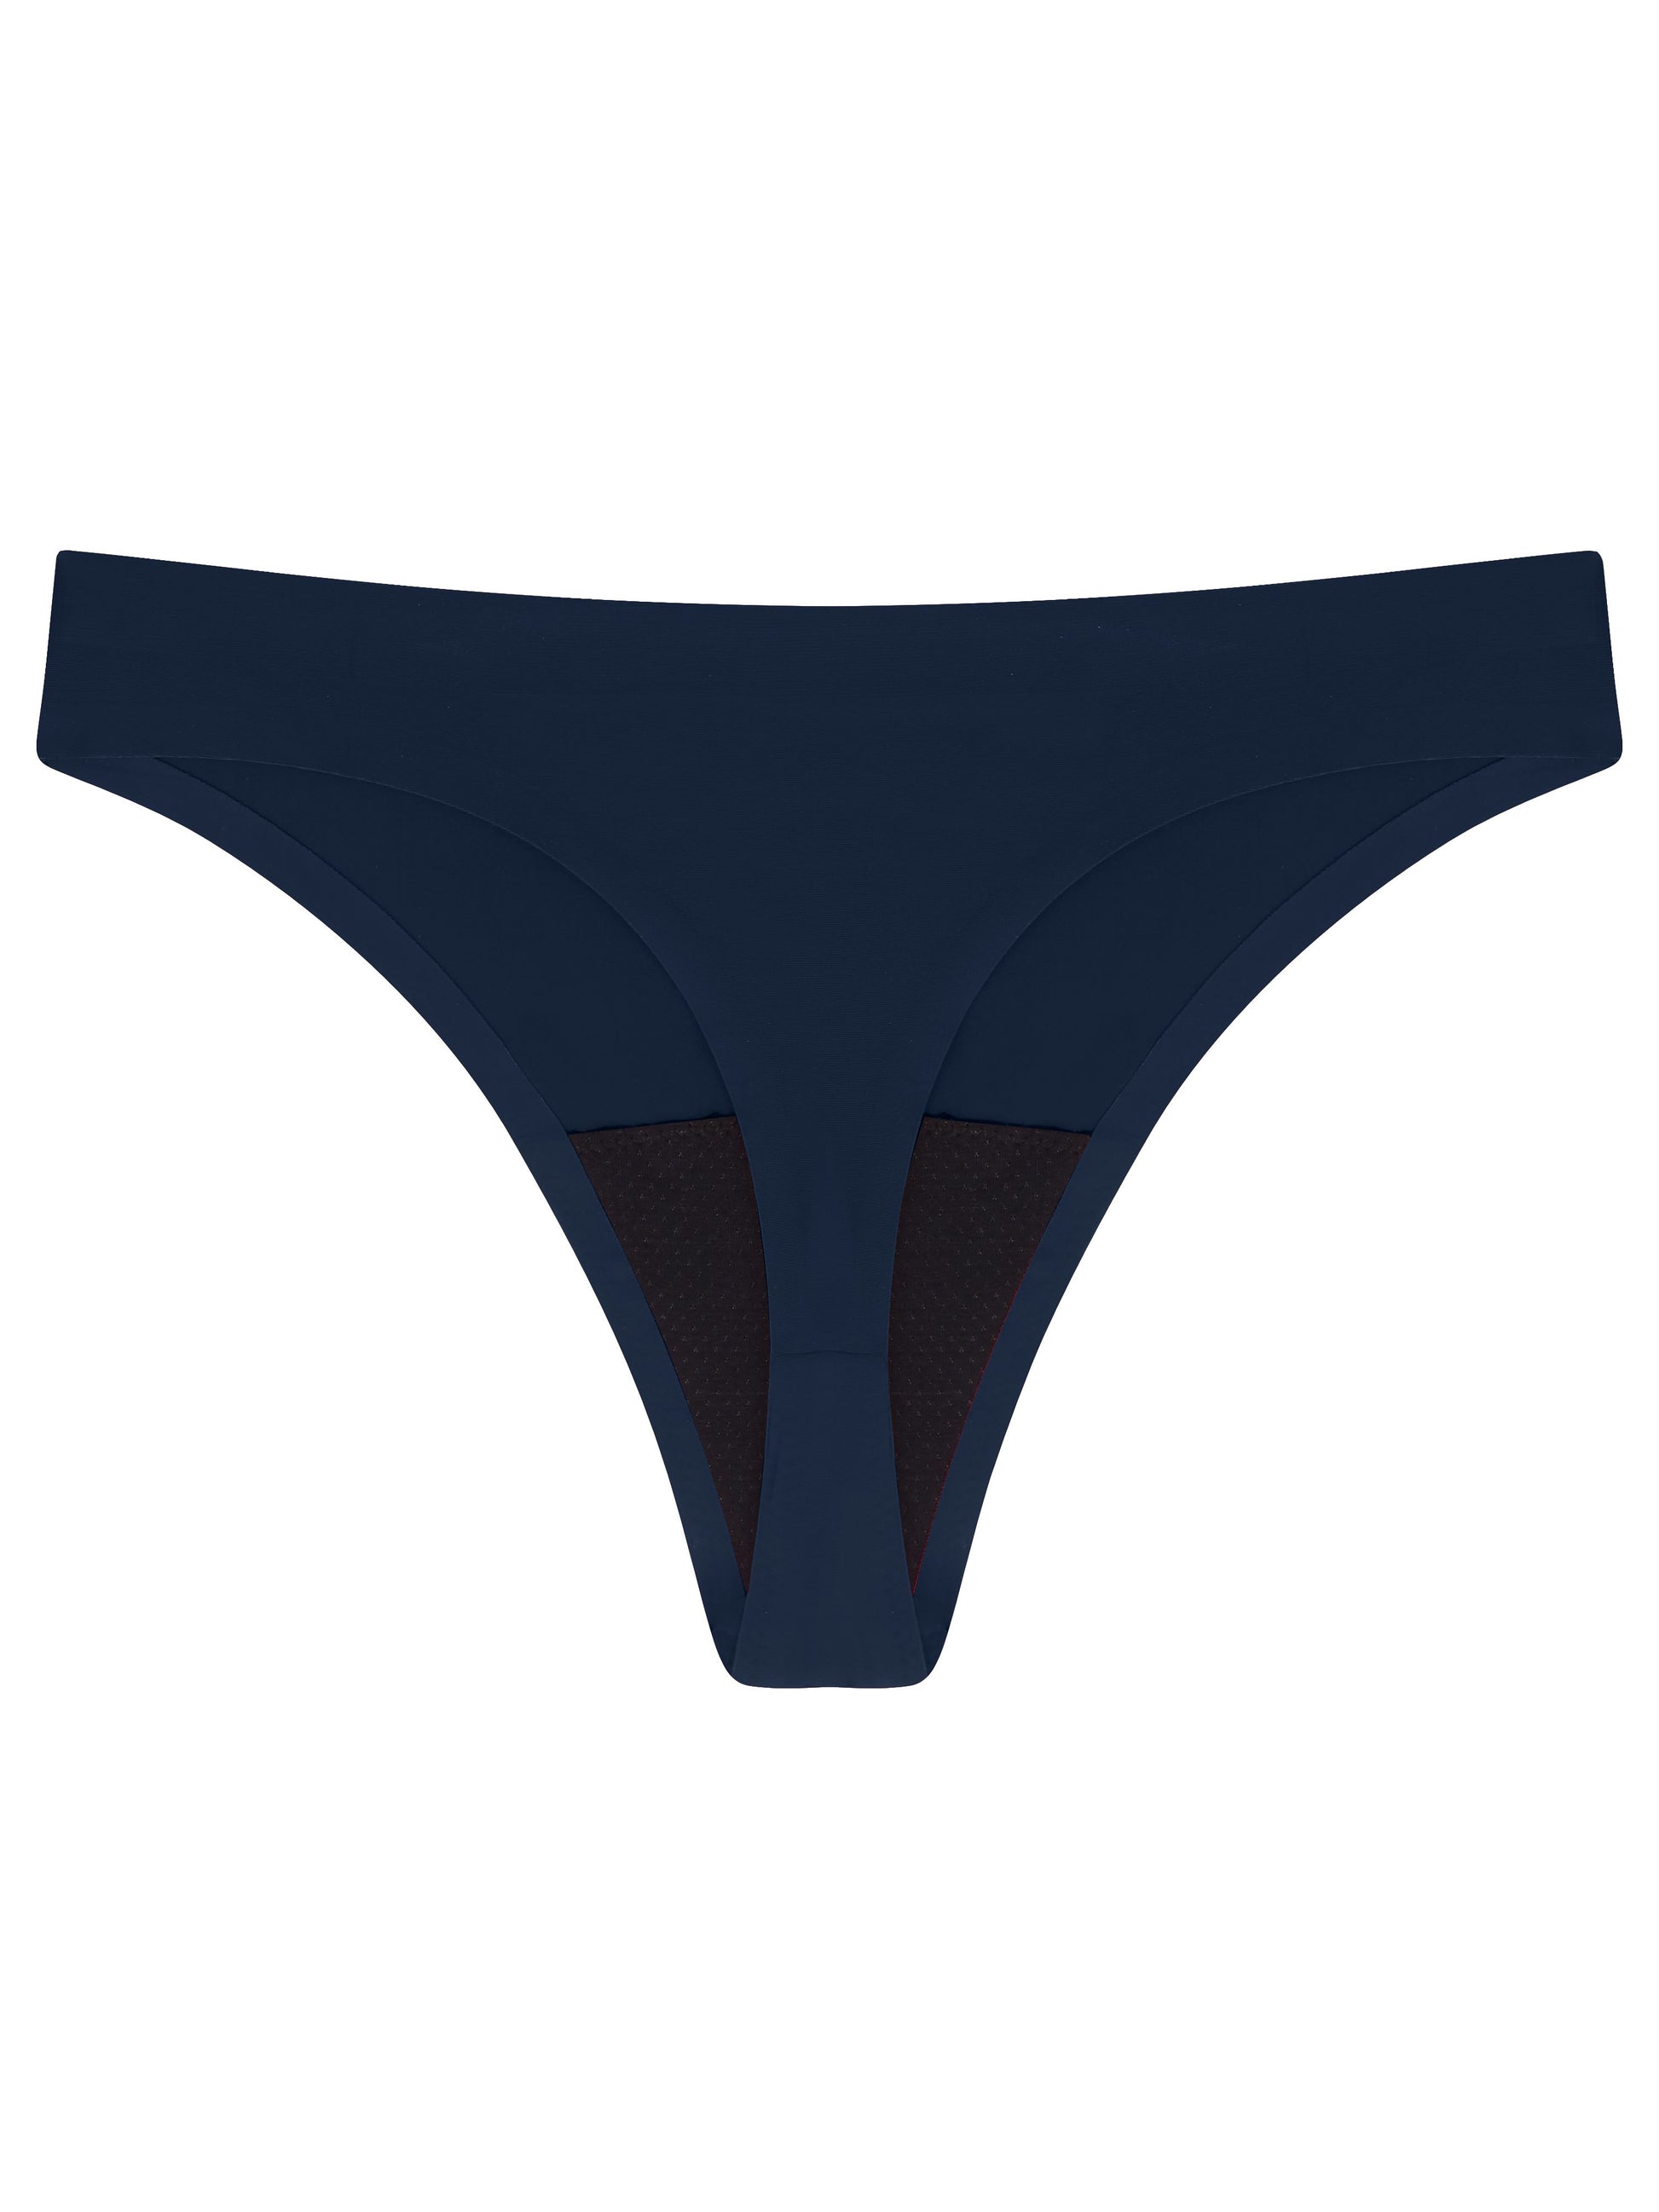 Imaara Feminine Period Underwear Inclusive Knickers. Product Padma Admiral Navy